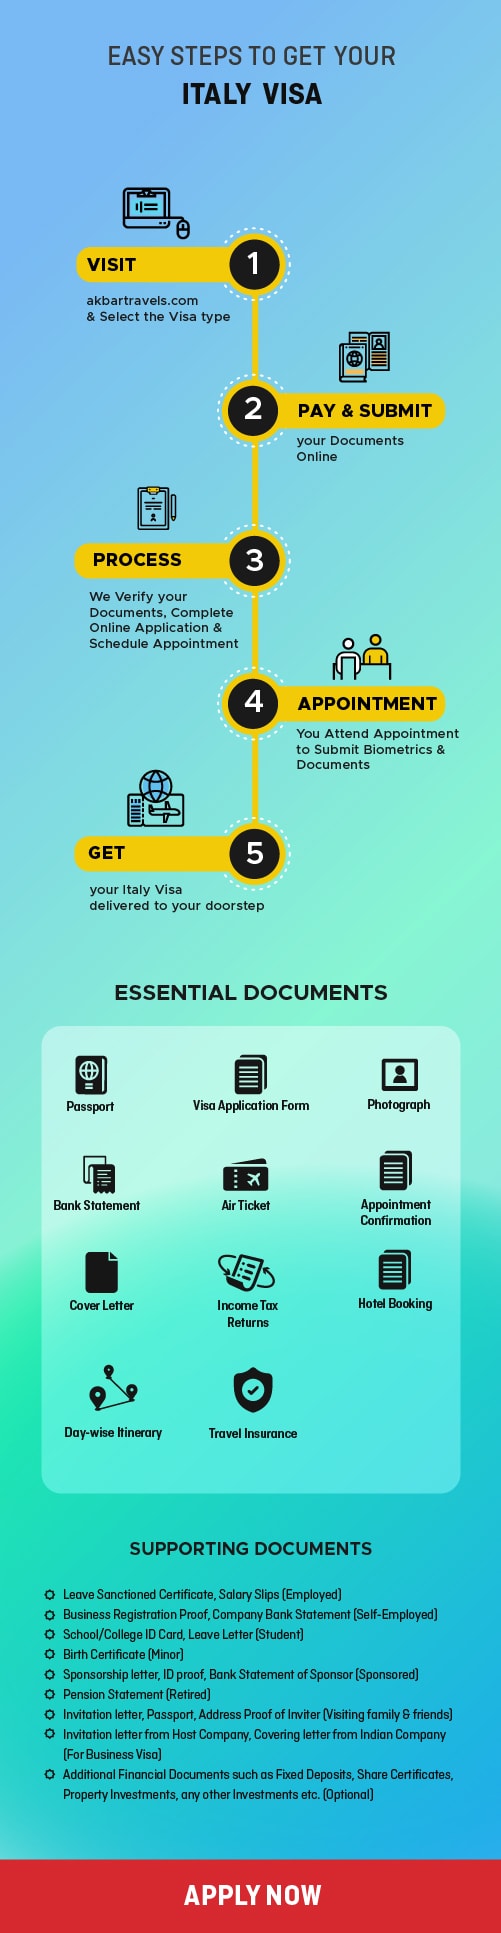 Italy Visa process and requirements